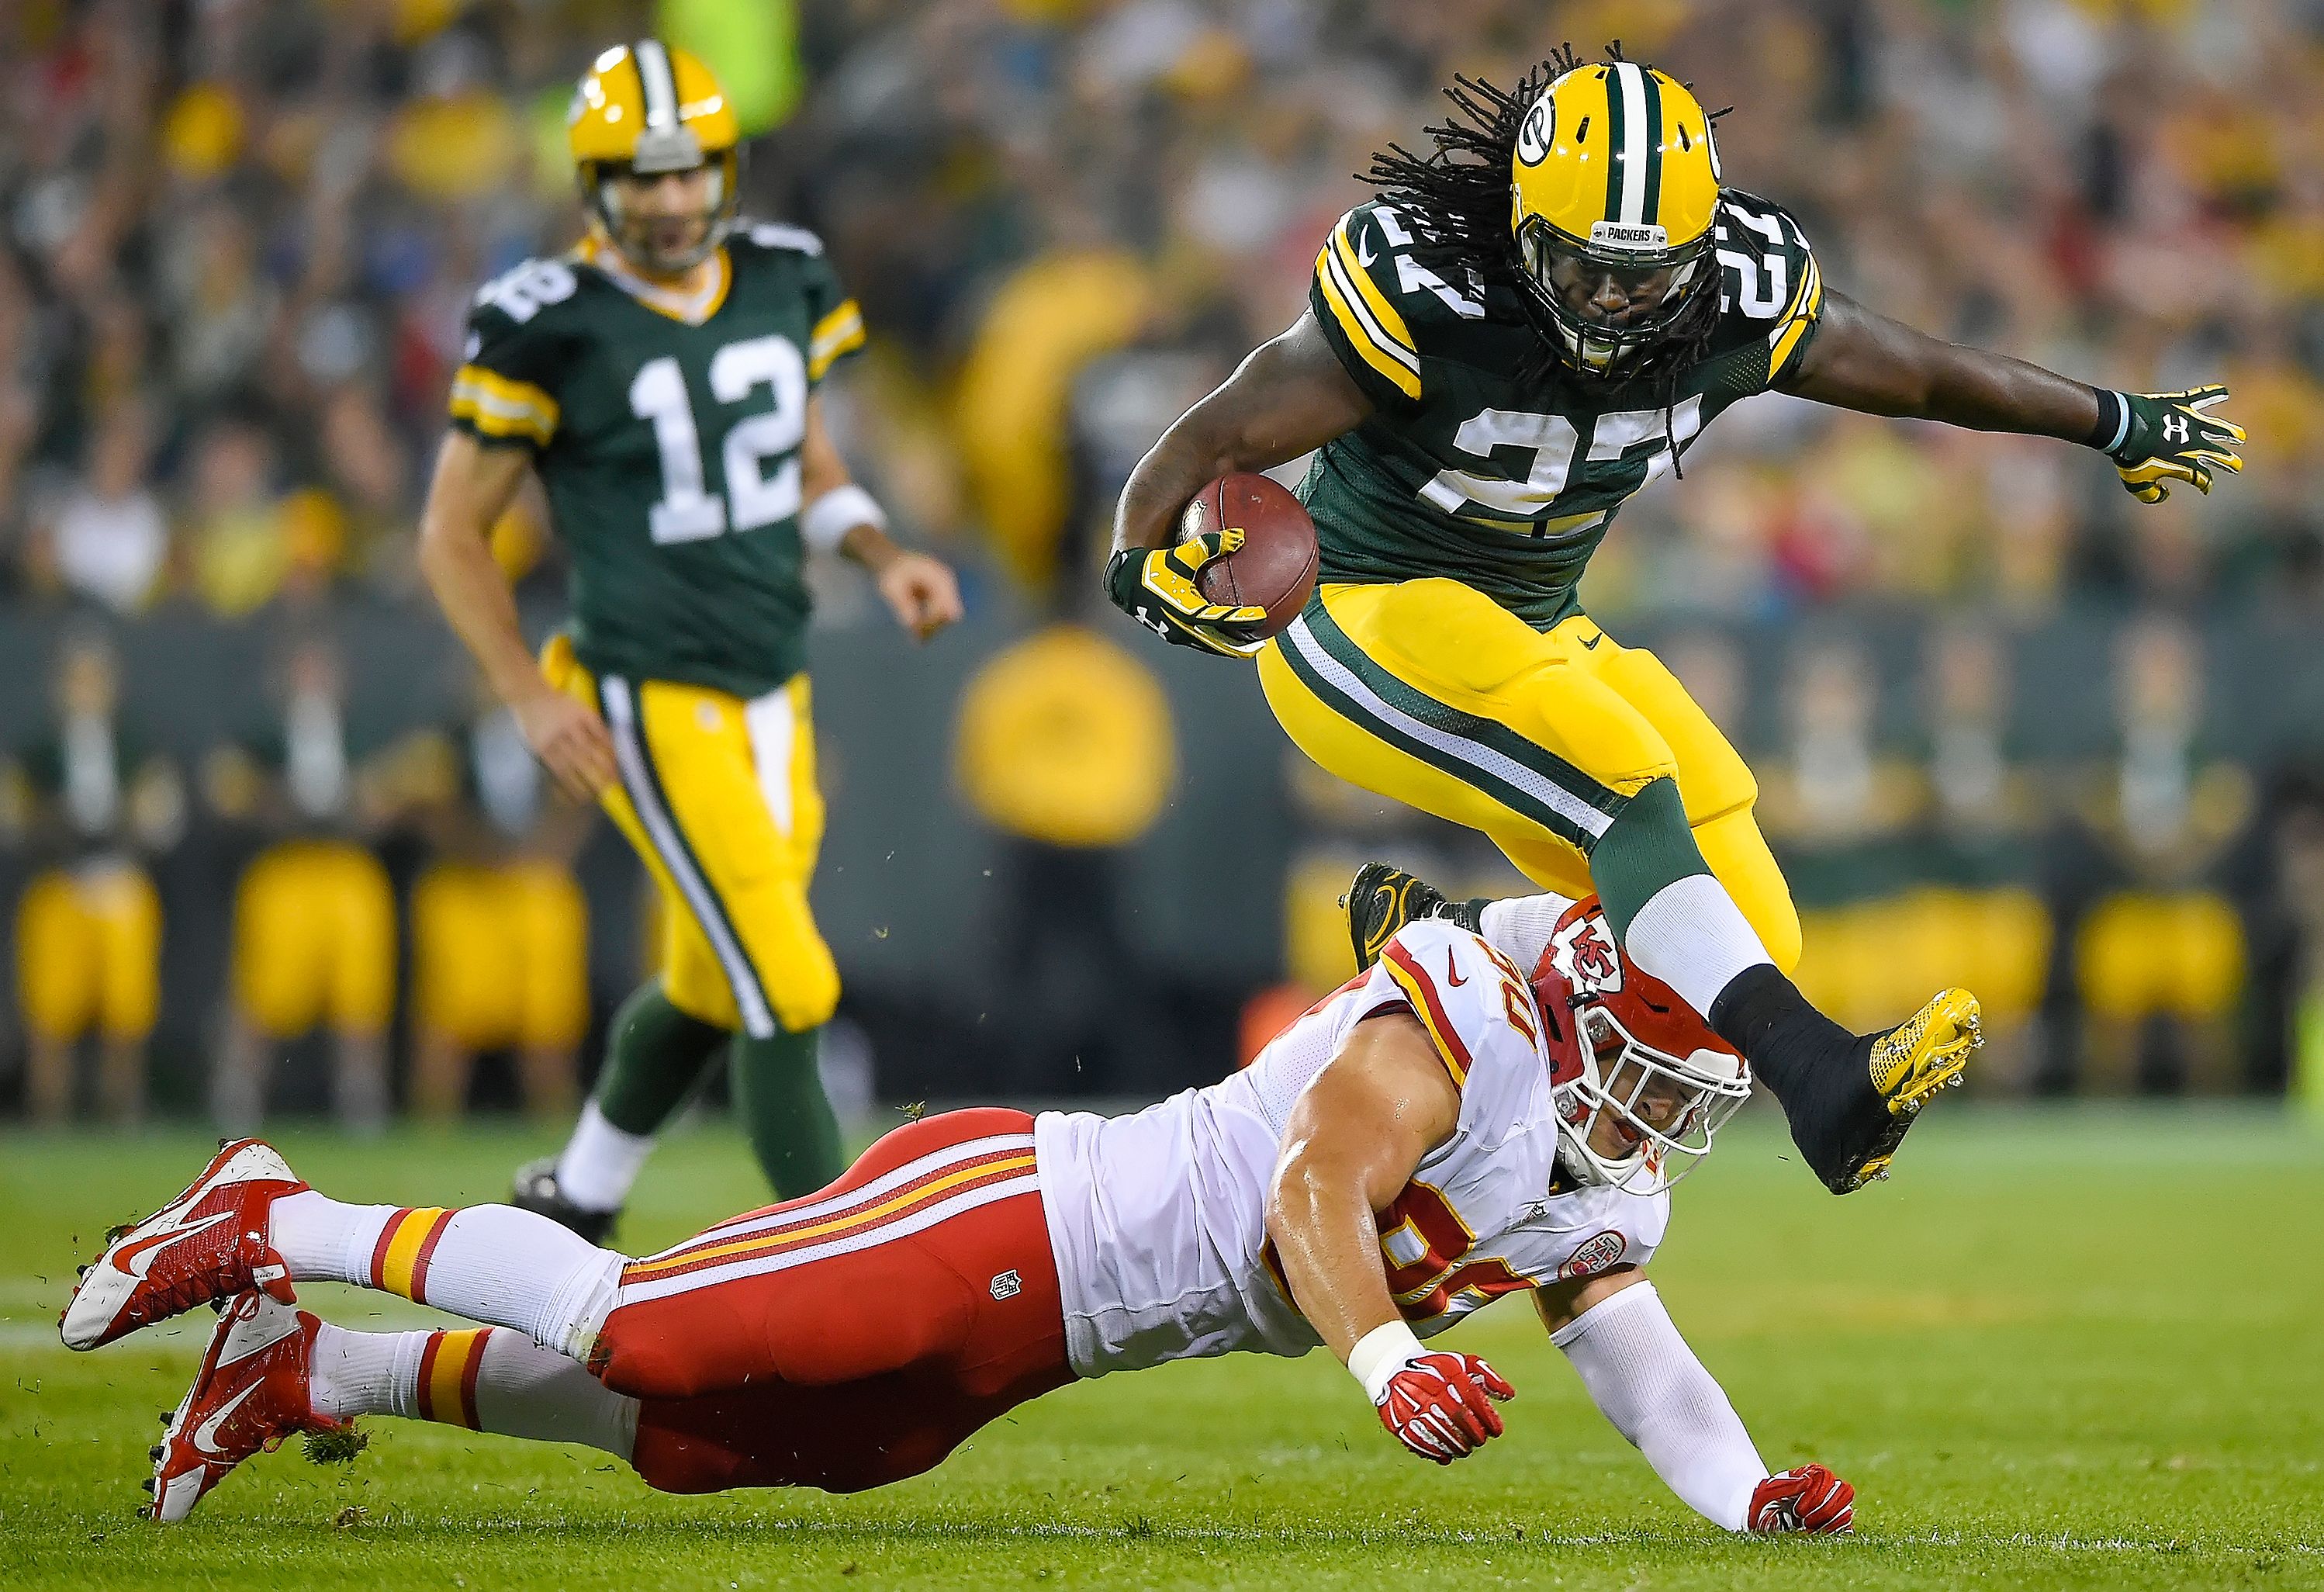 Leapfrog - Photos: Packers vs. Chiefs - ESPN2996 x 2052